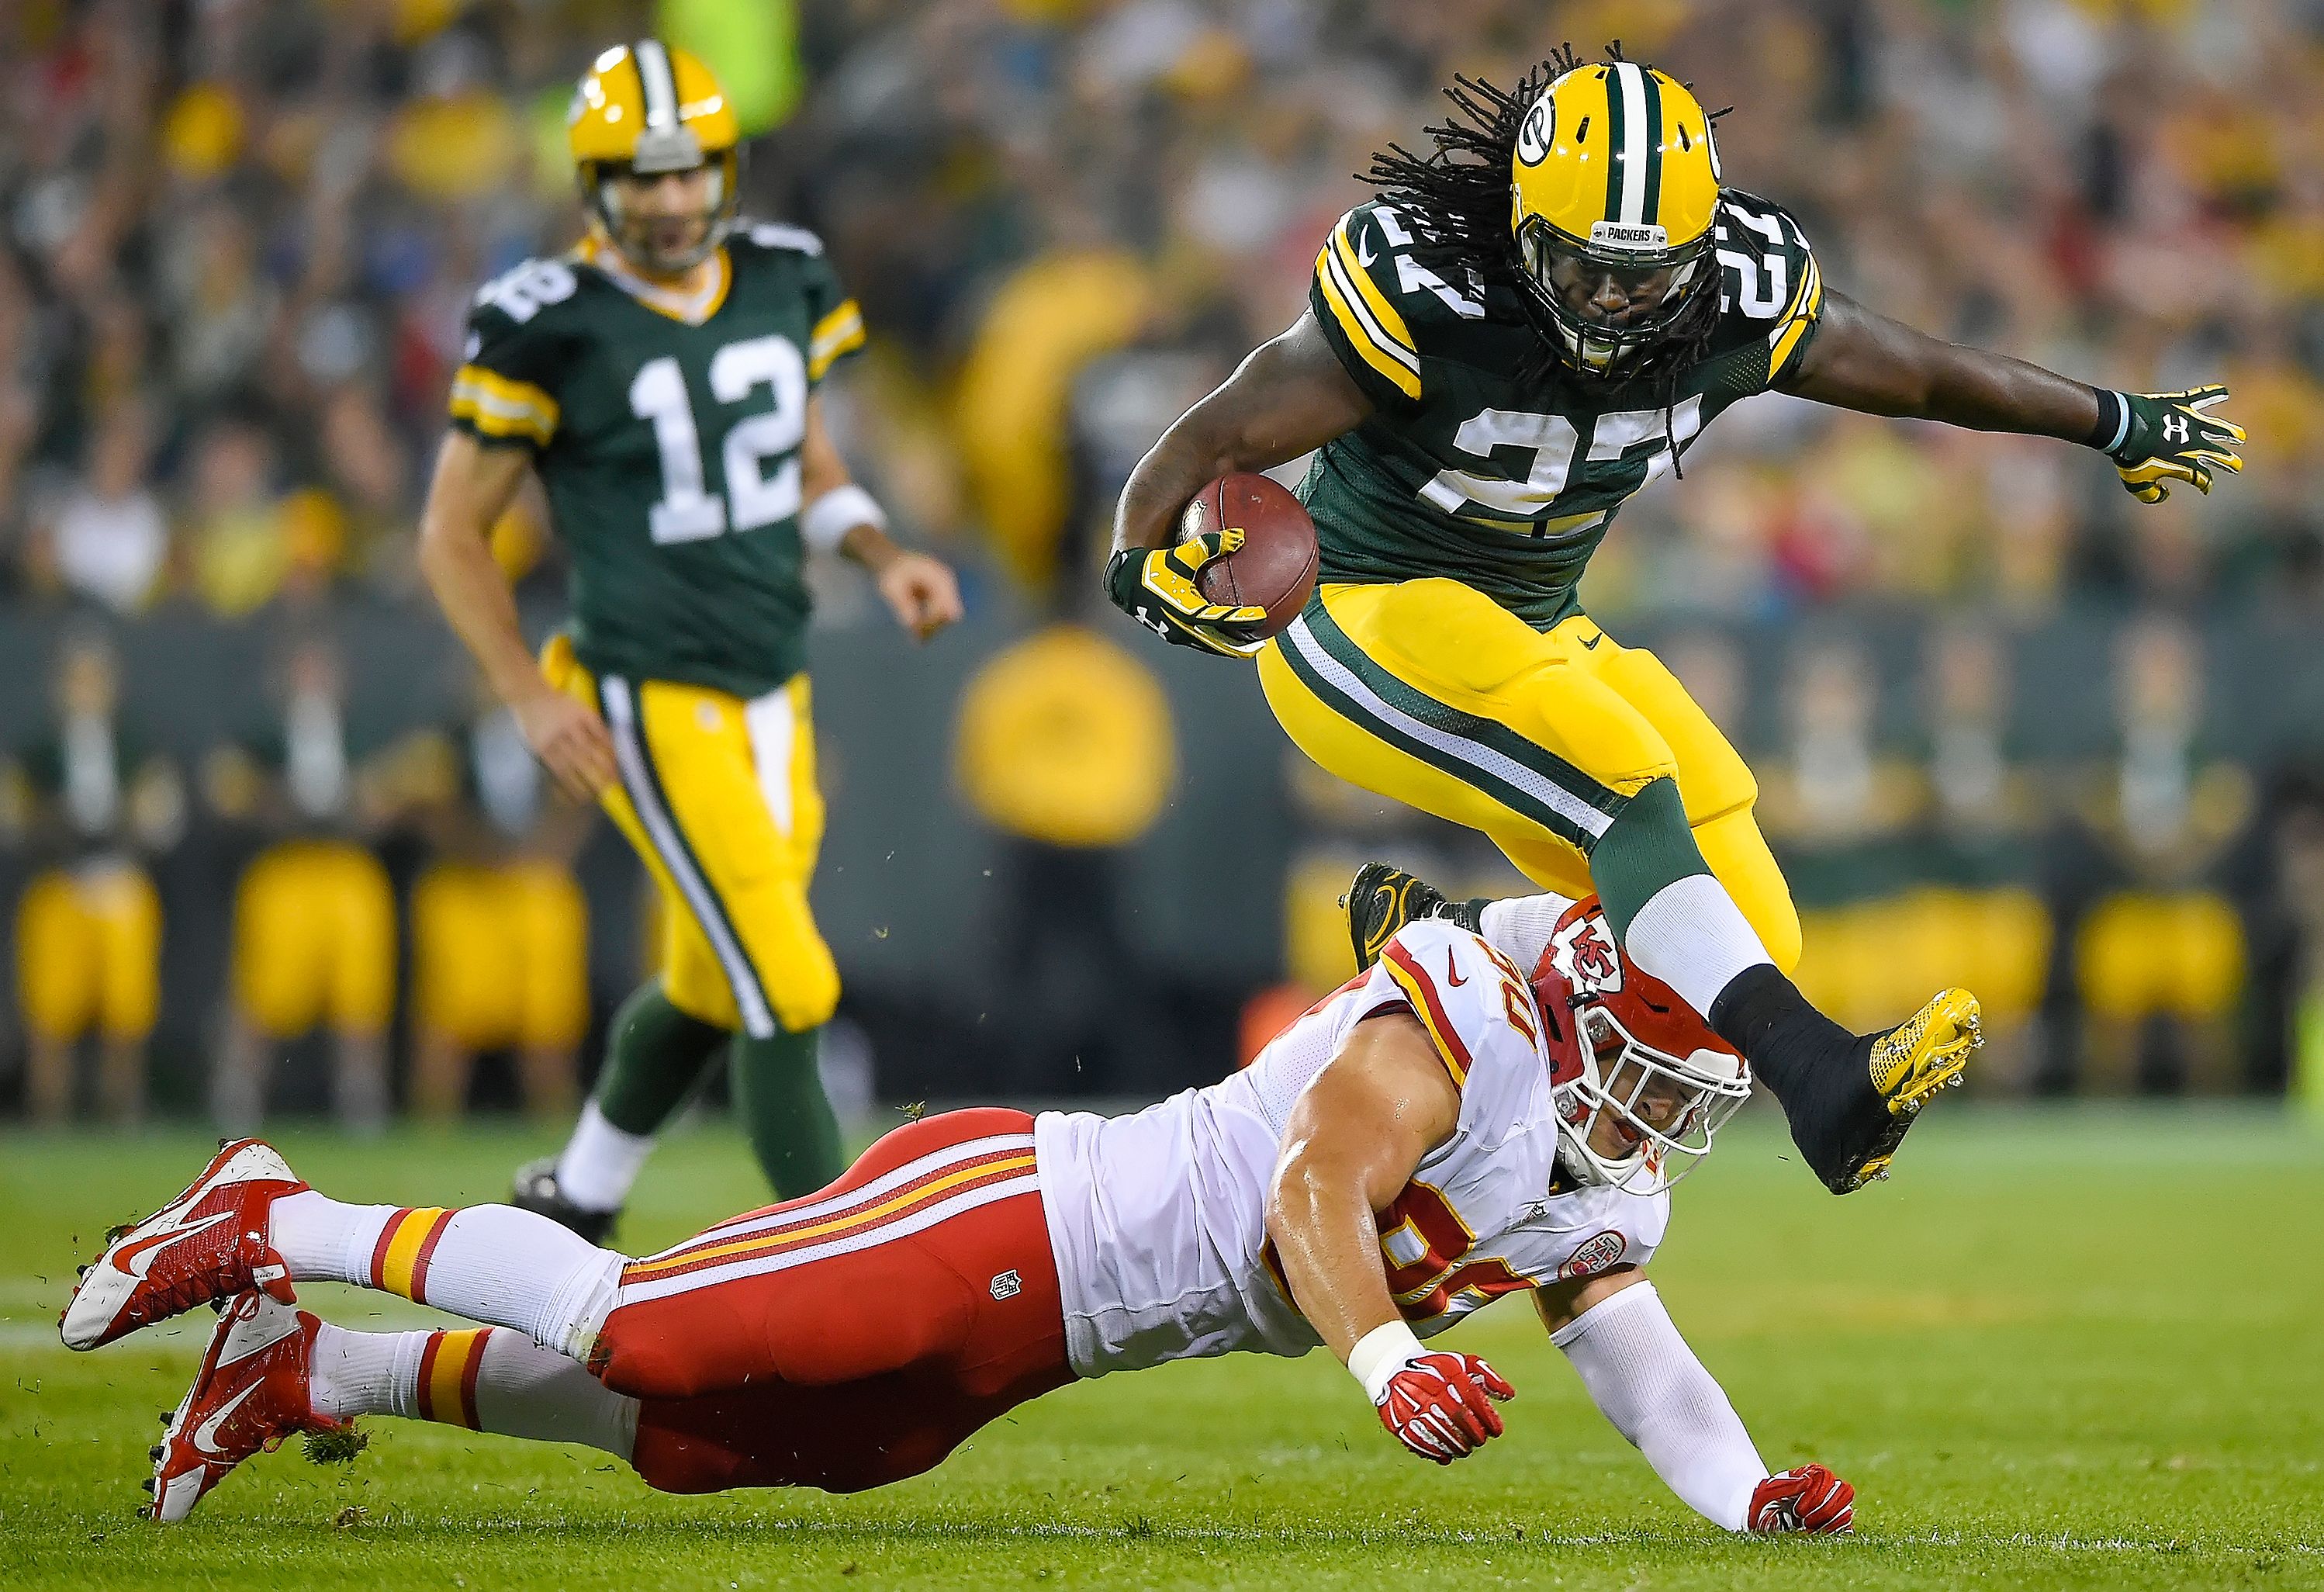 Leapfrog - Photos: Packers vs. Chiefs - ESPN2996 x 2052